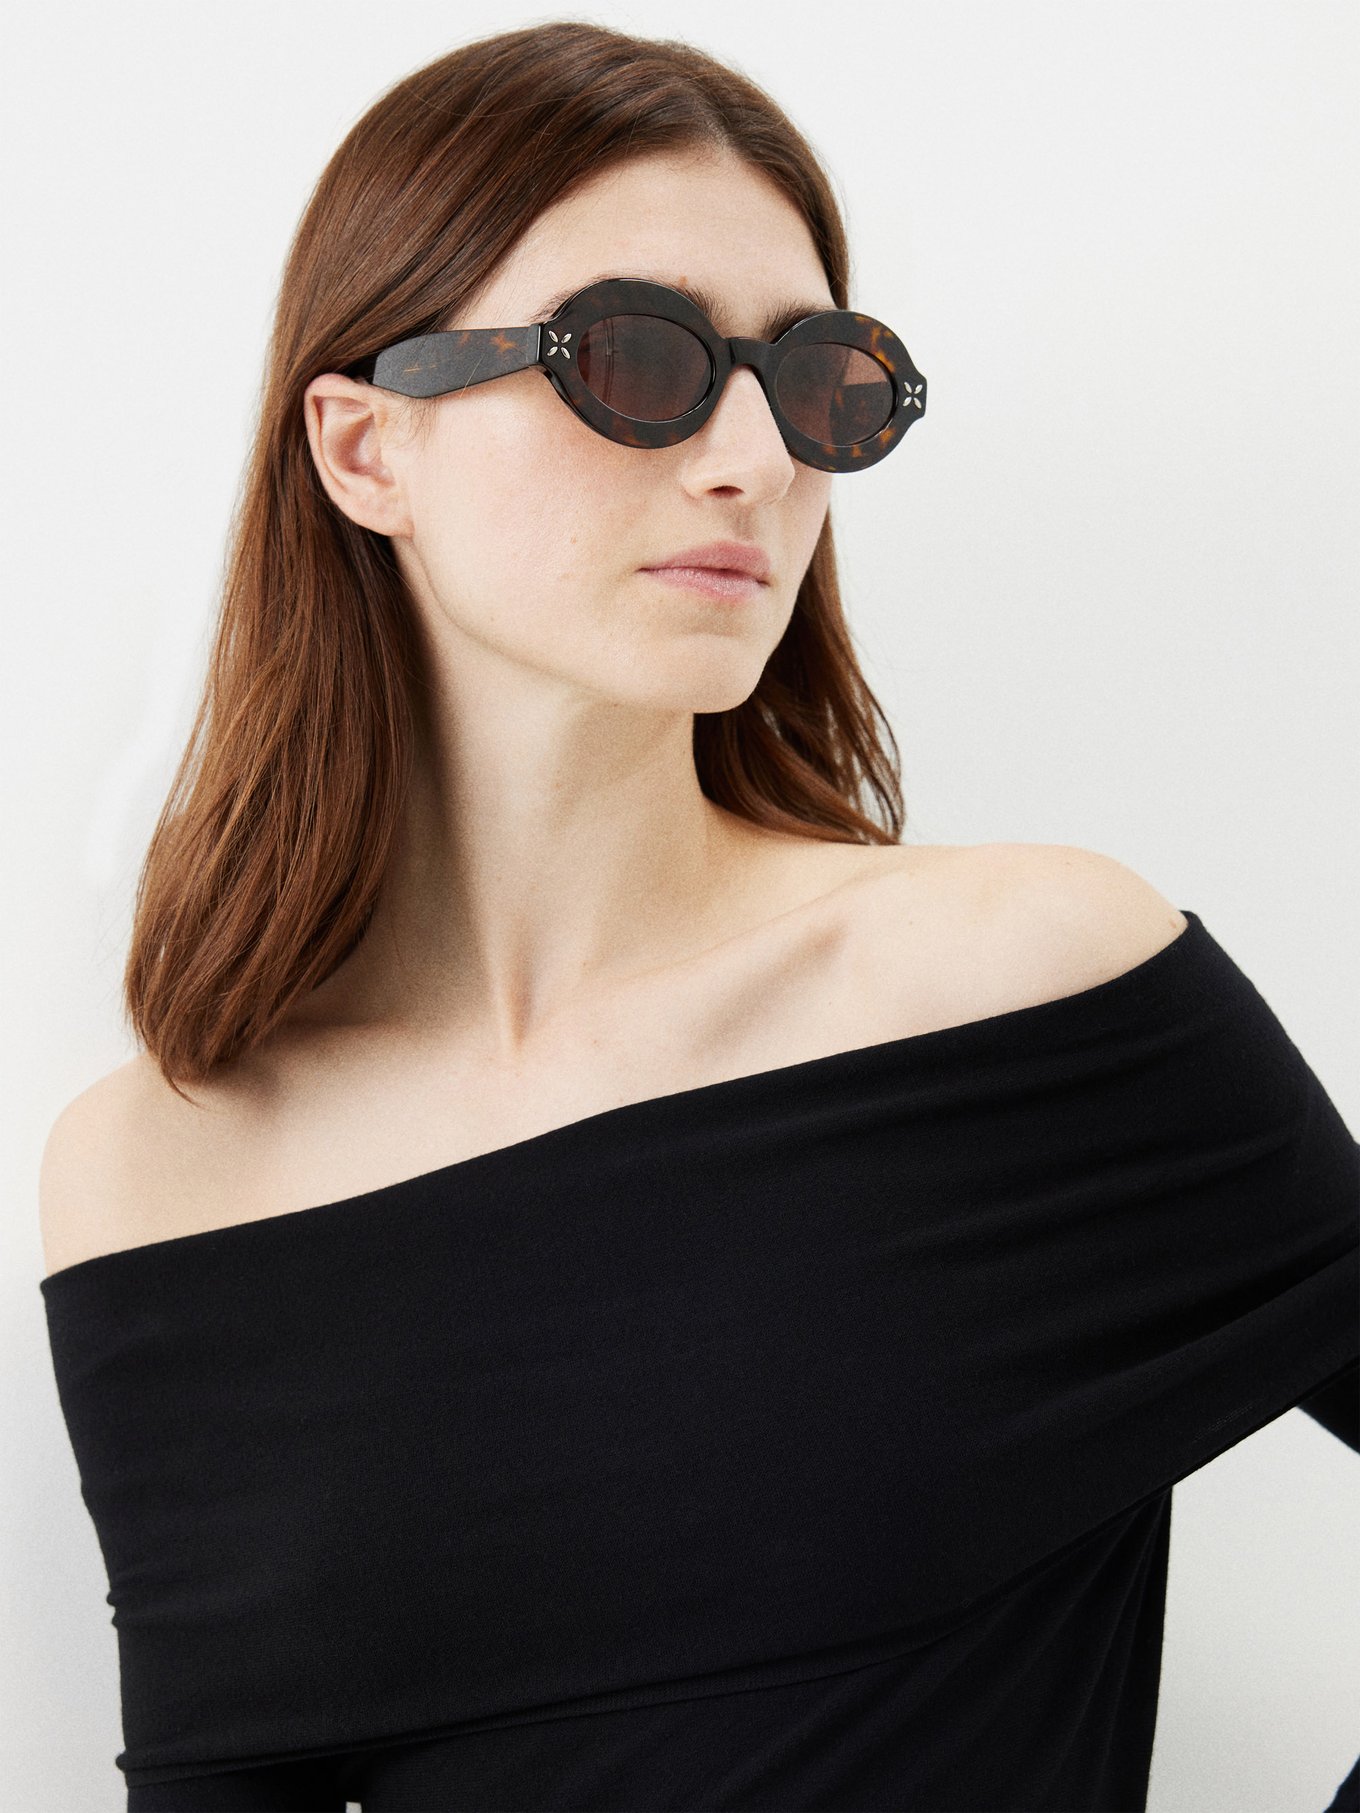 Louis Vuitton - My Monogram Round Sunglasses - Acetate - Dark Tortoise - Women - Luxury